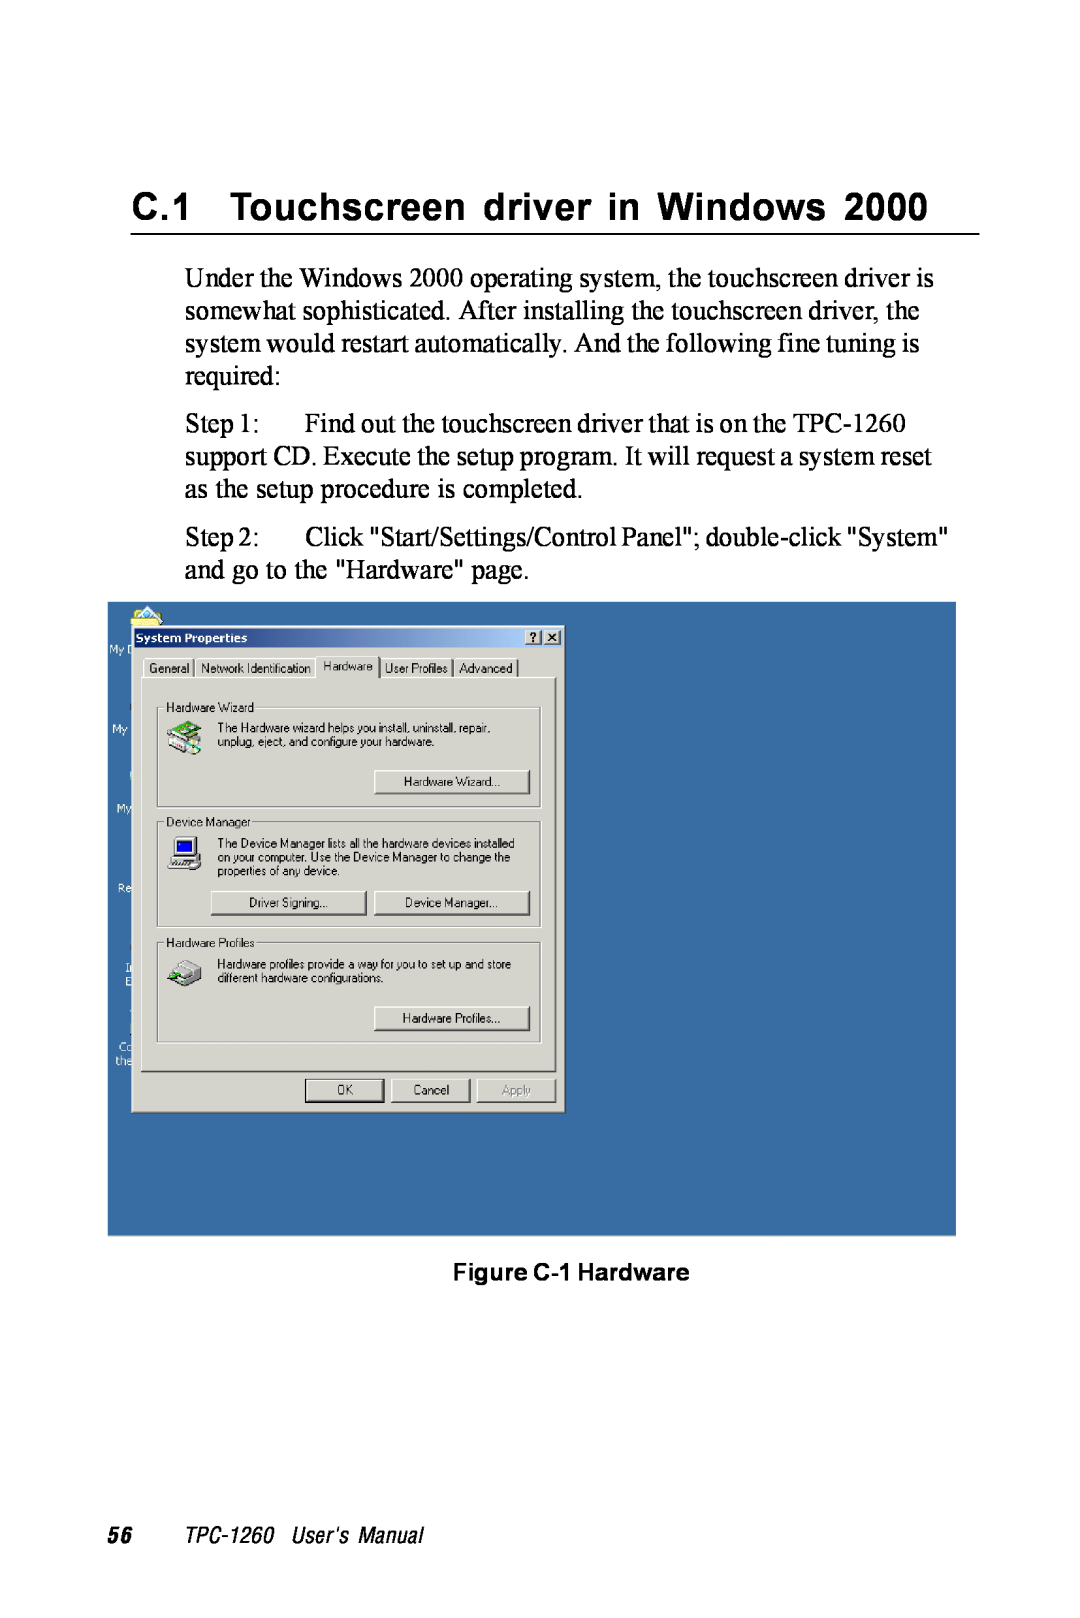 Advantech TPC-1260 manual C.1 Touchscreen driver in Windows, Figure C-1 Hardware 